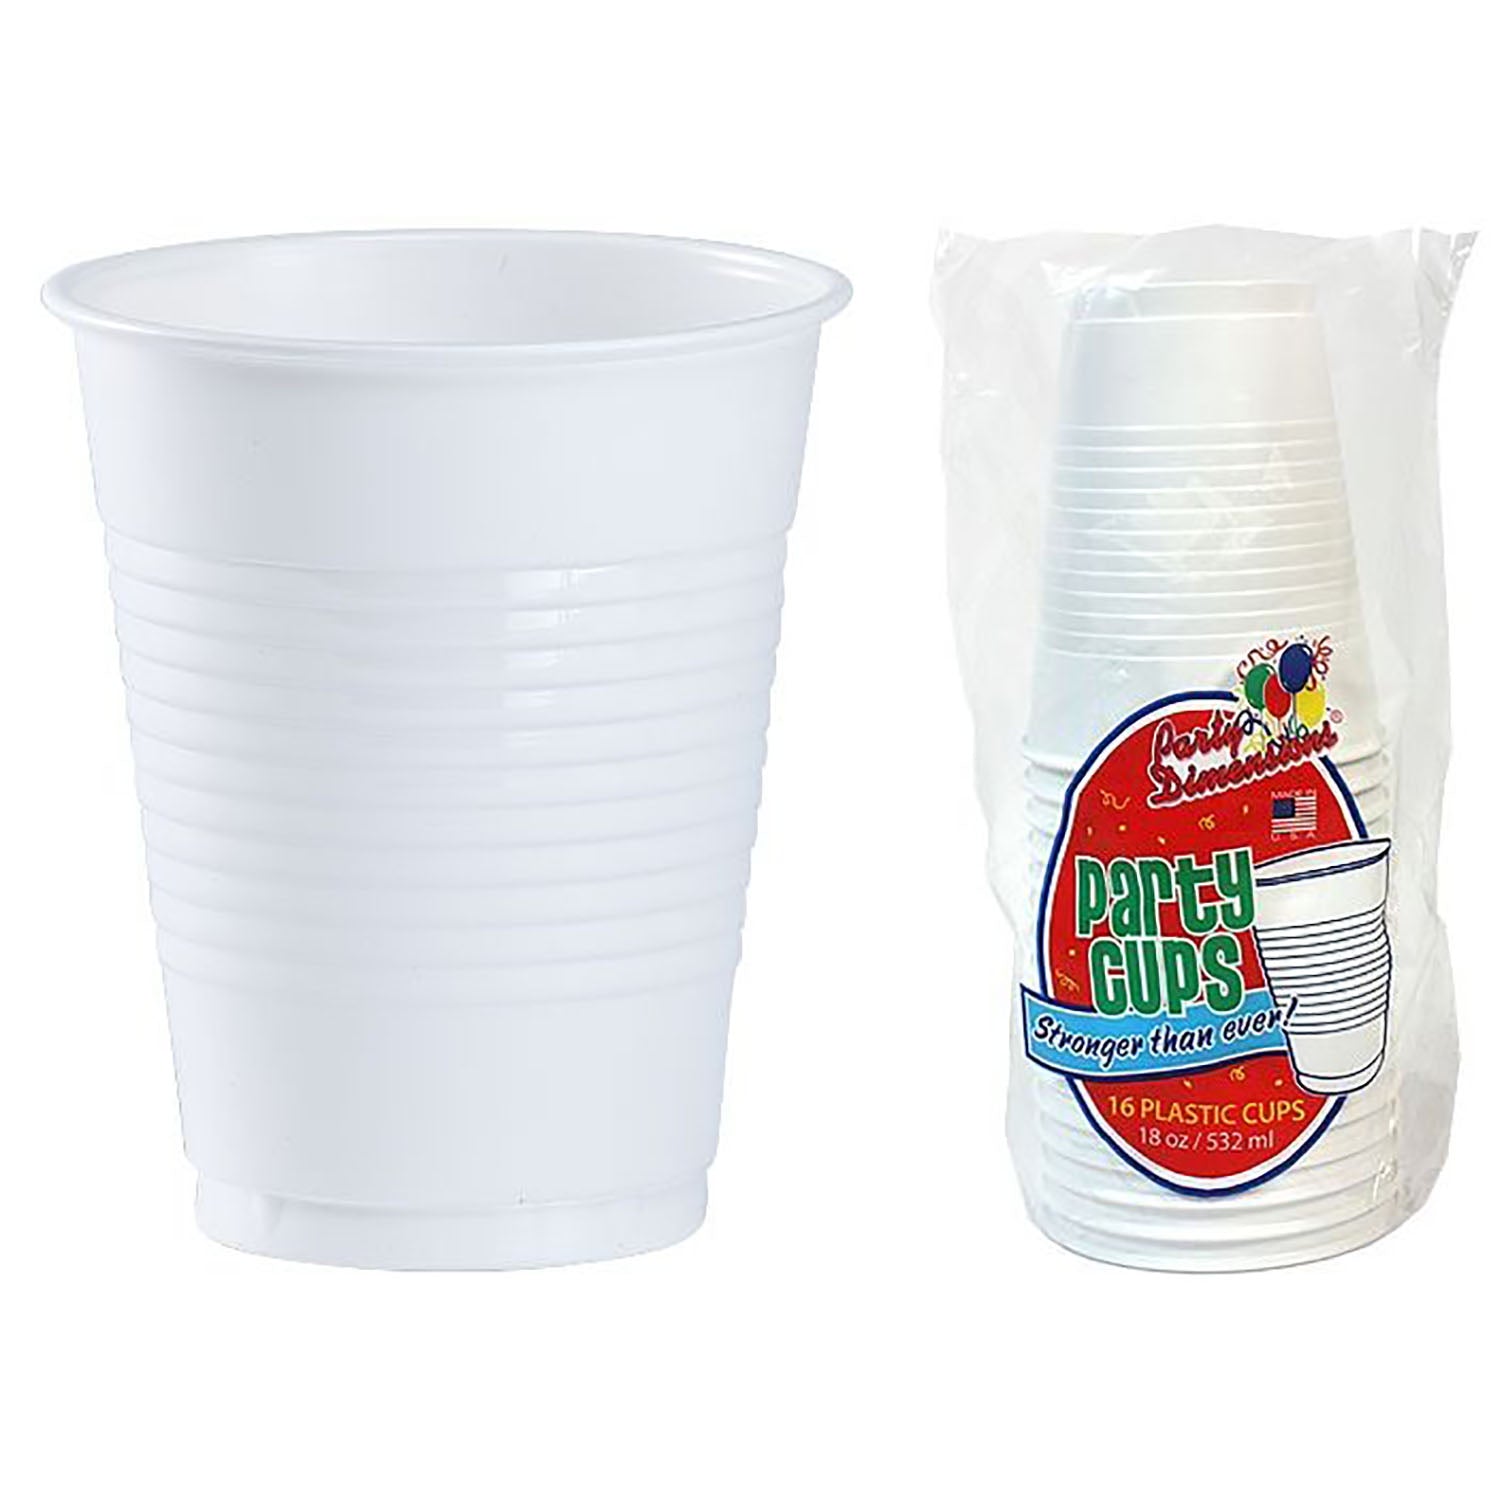 White Co-Ex Plastic Cup 18 oz